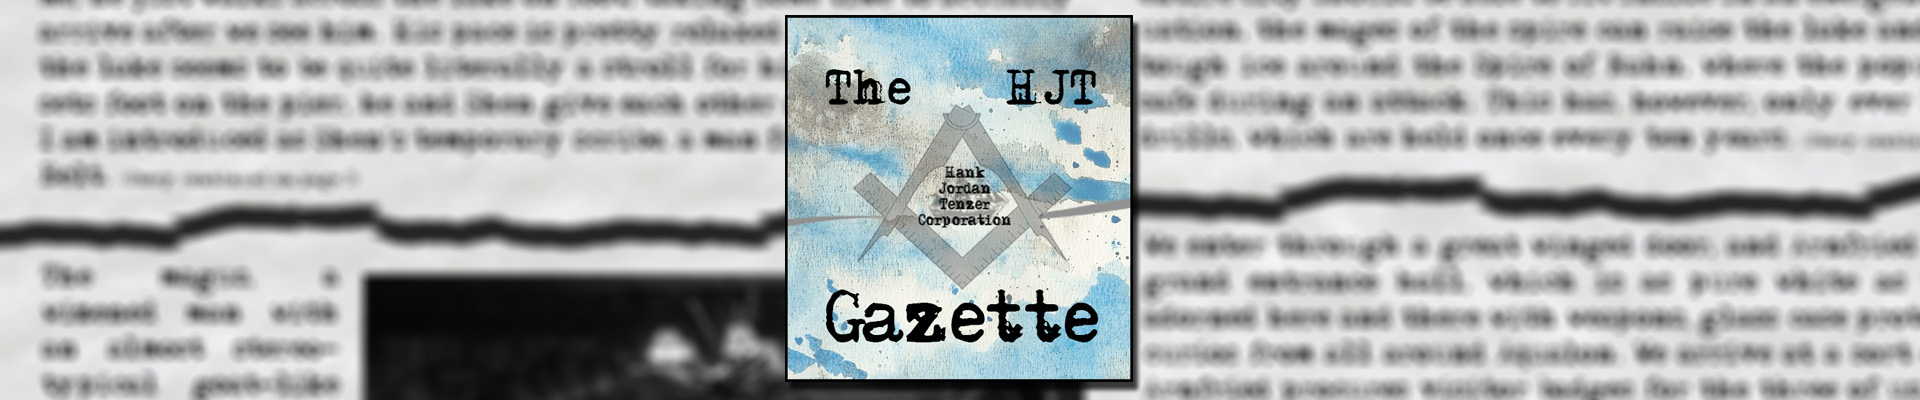 The HJT Gazette cover